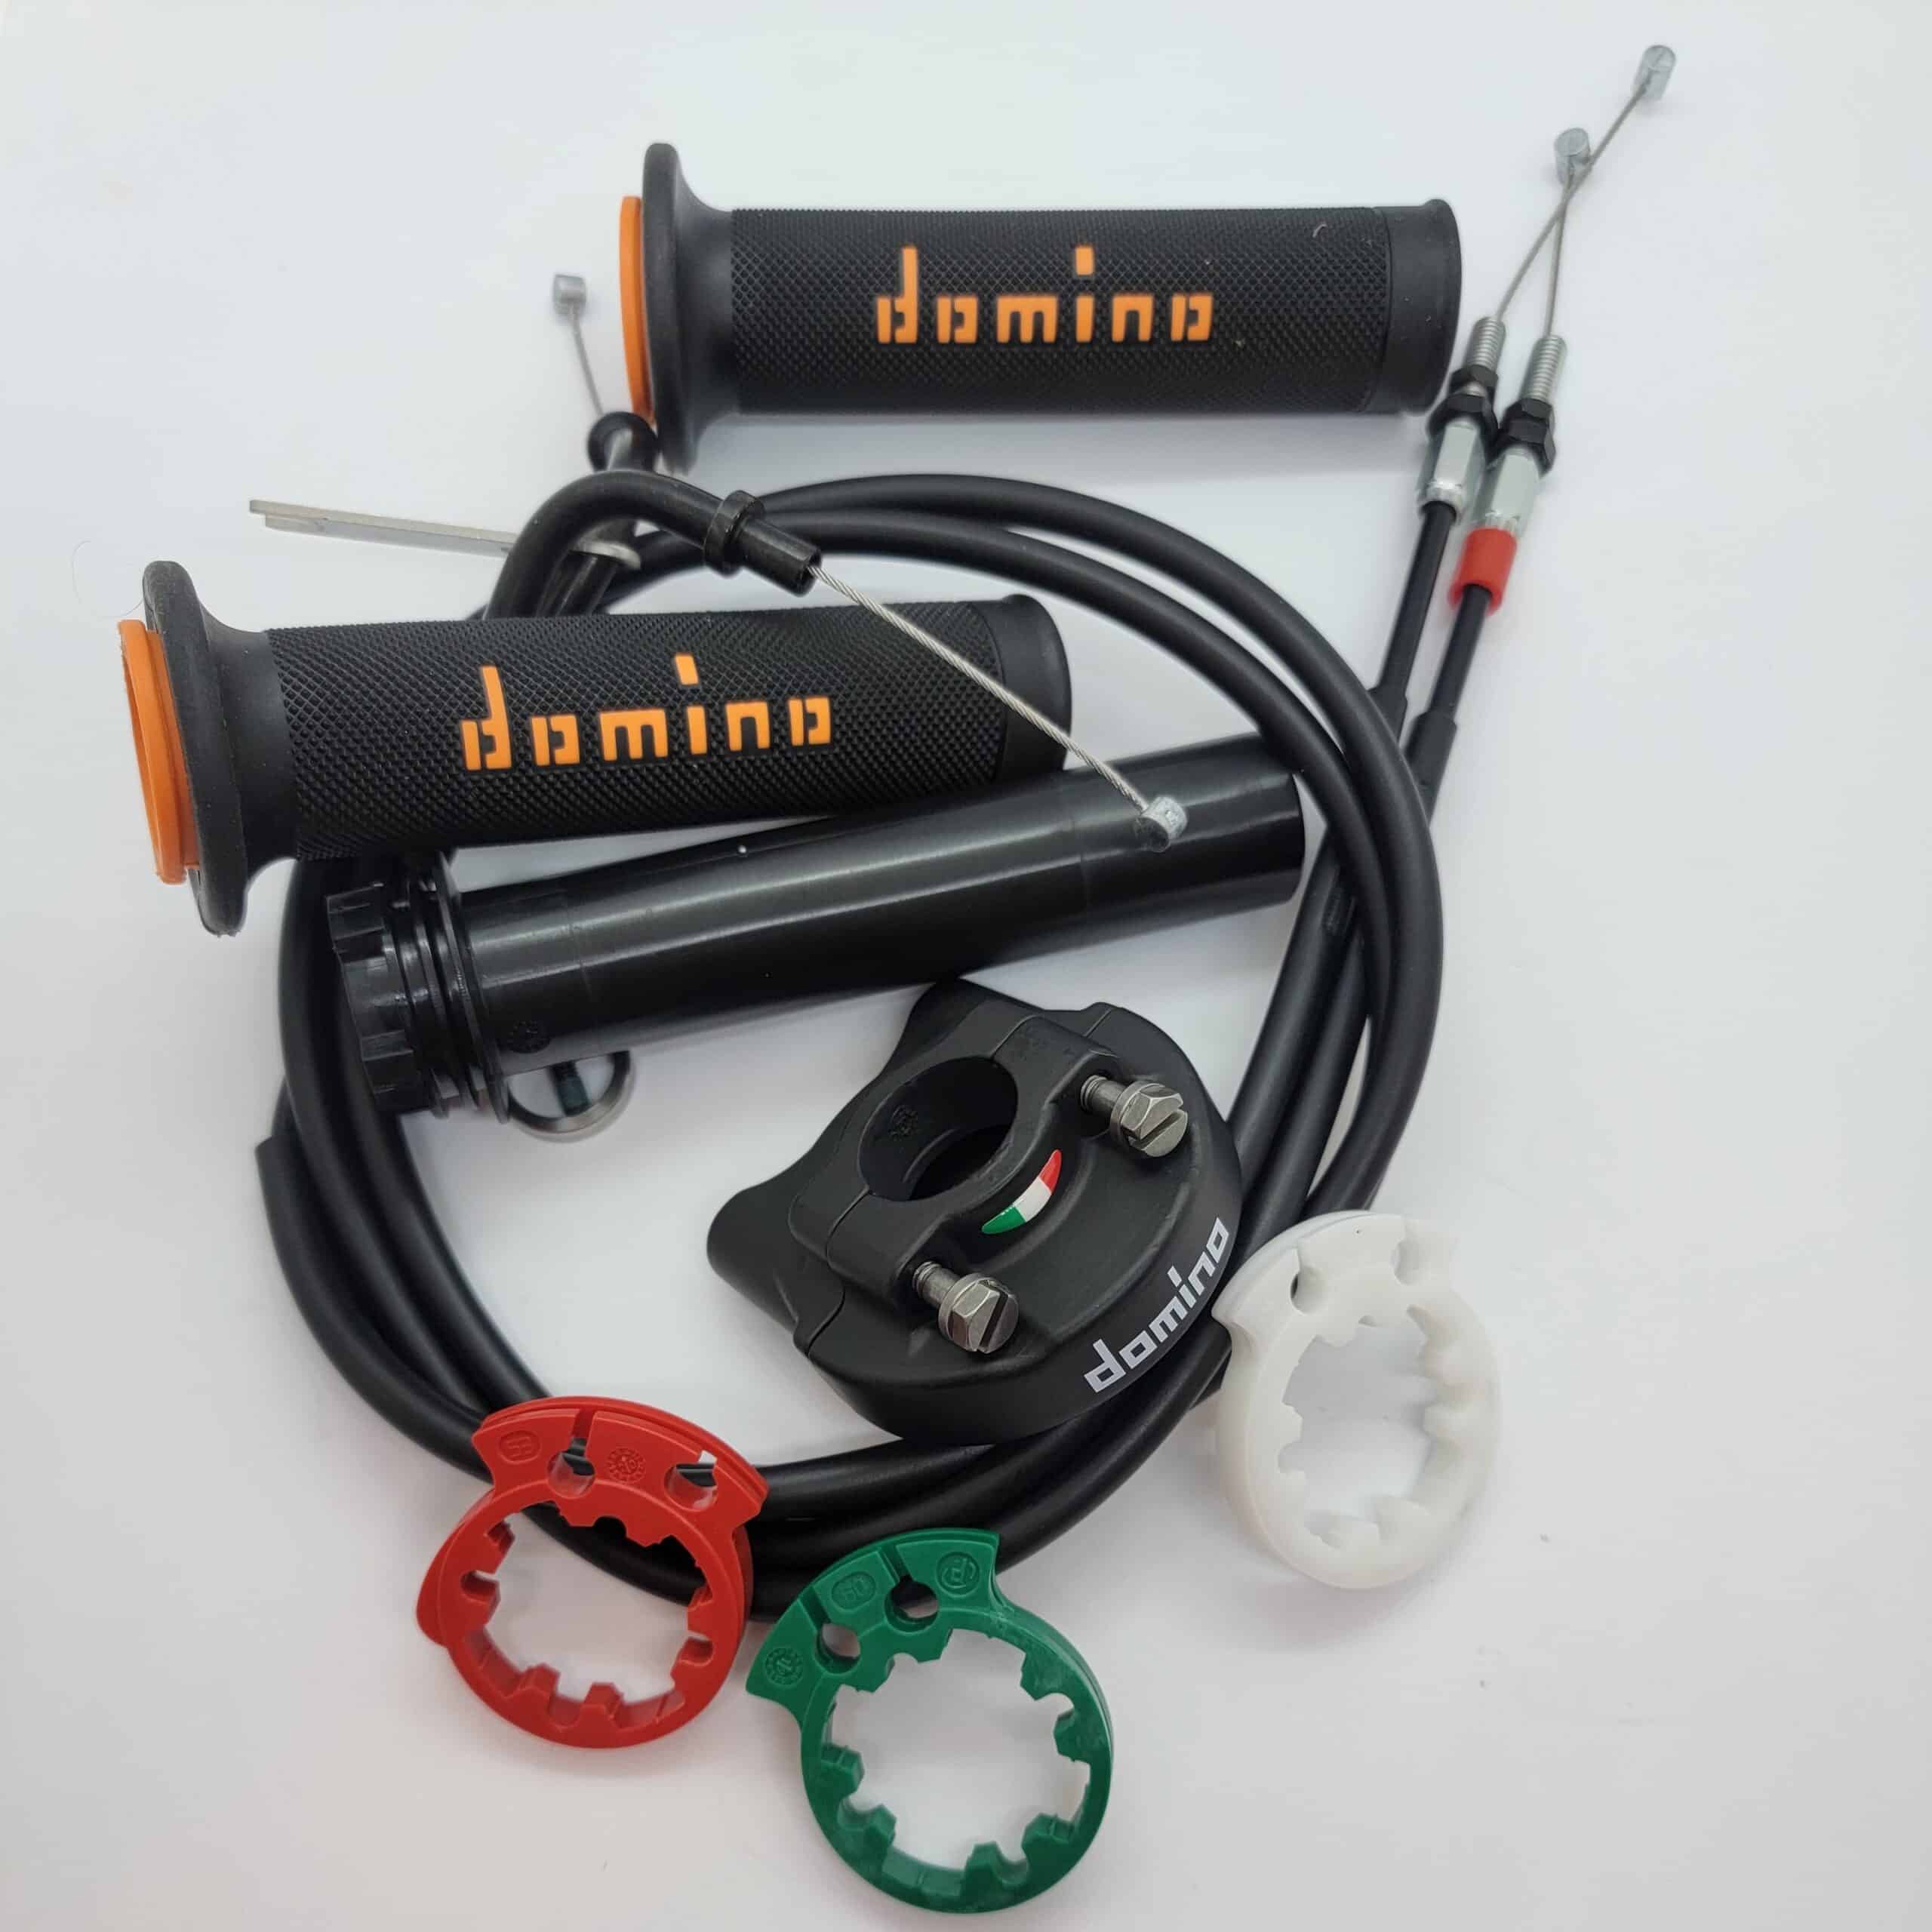 Tirage rapide Domino XM2 pour Yamaha R6 06-24